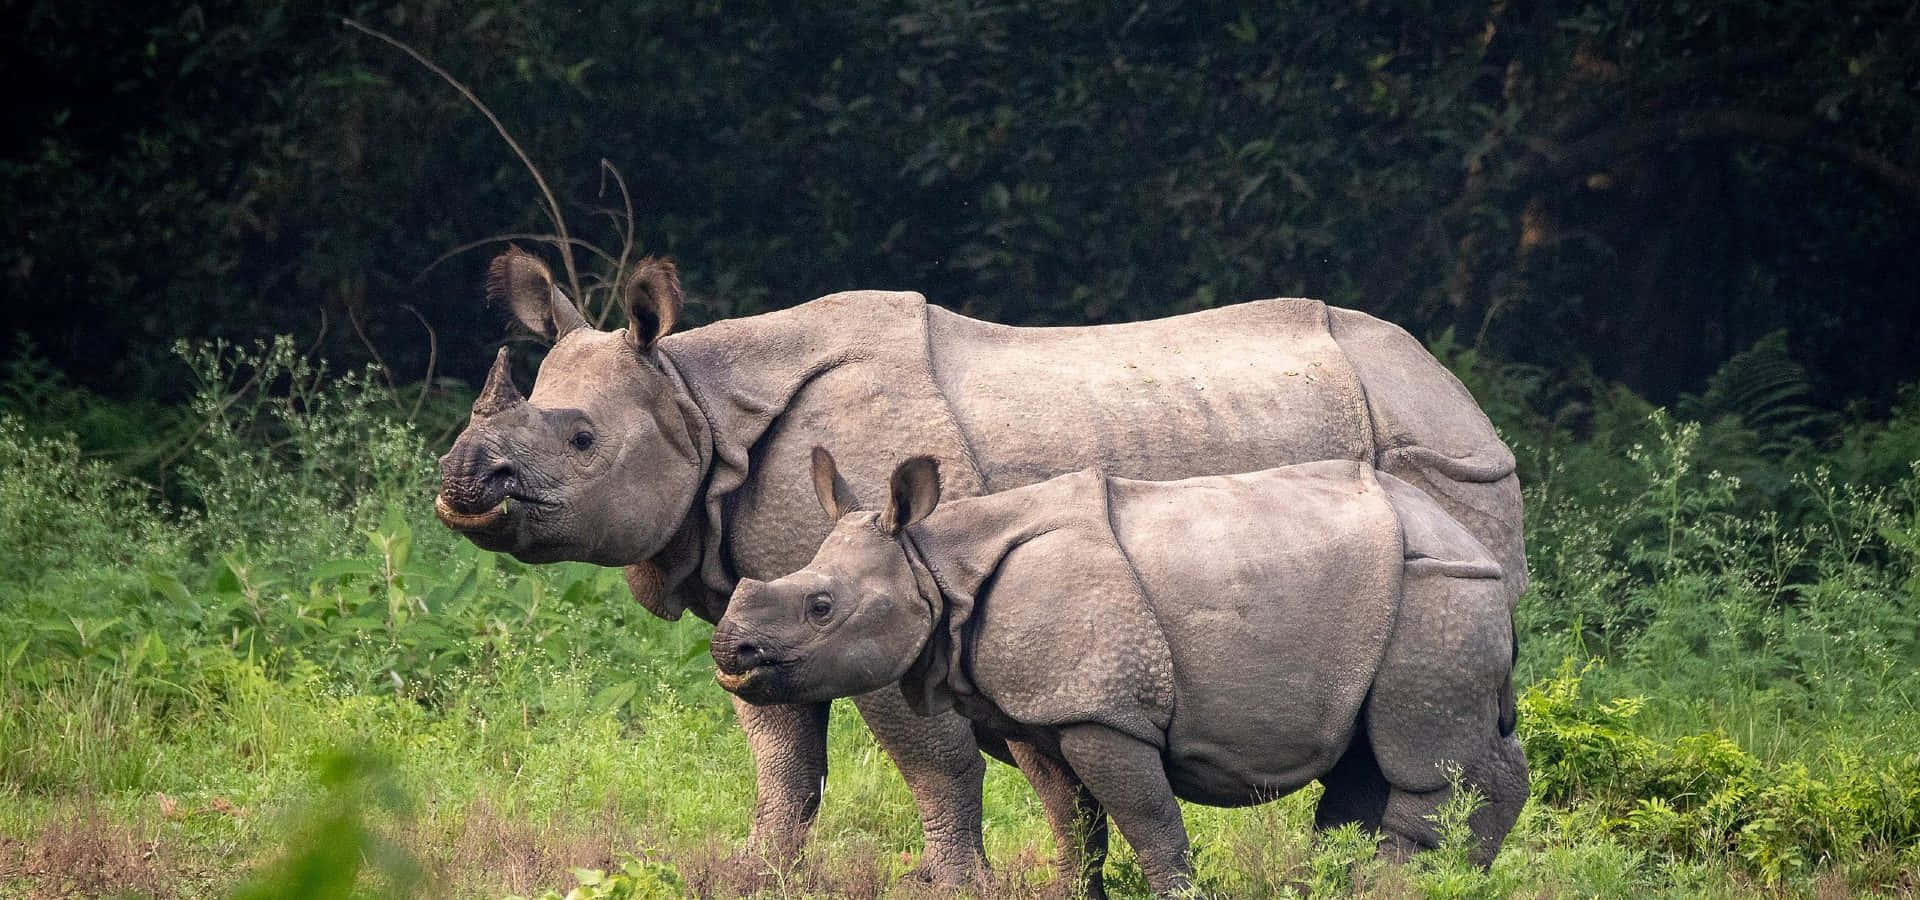 En ensom rhino, som står stolt i en stor afrikansk landskab